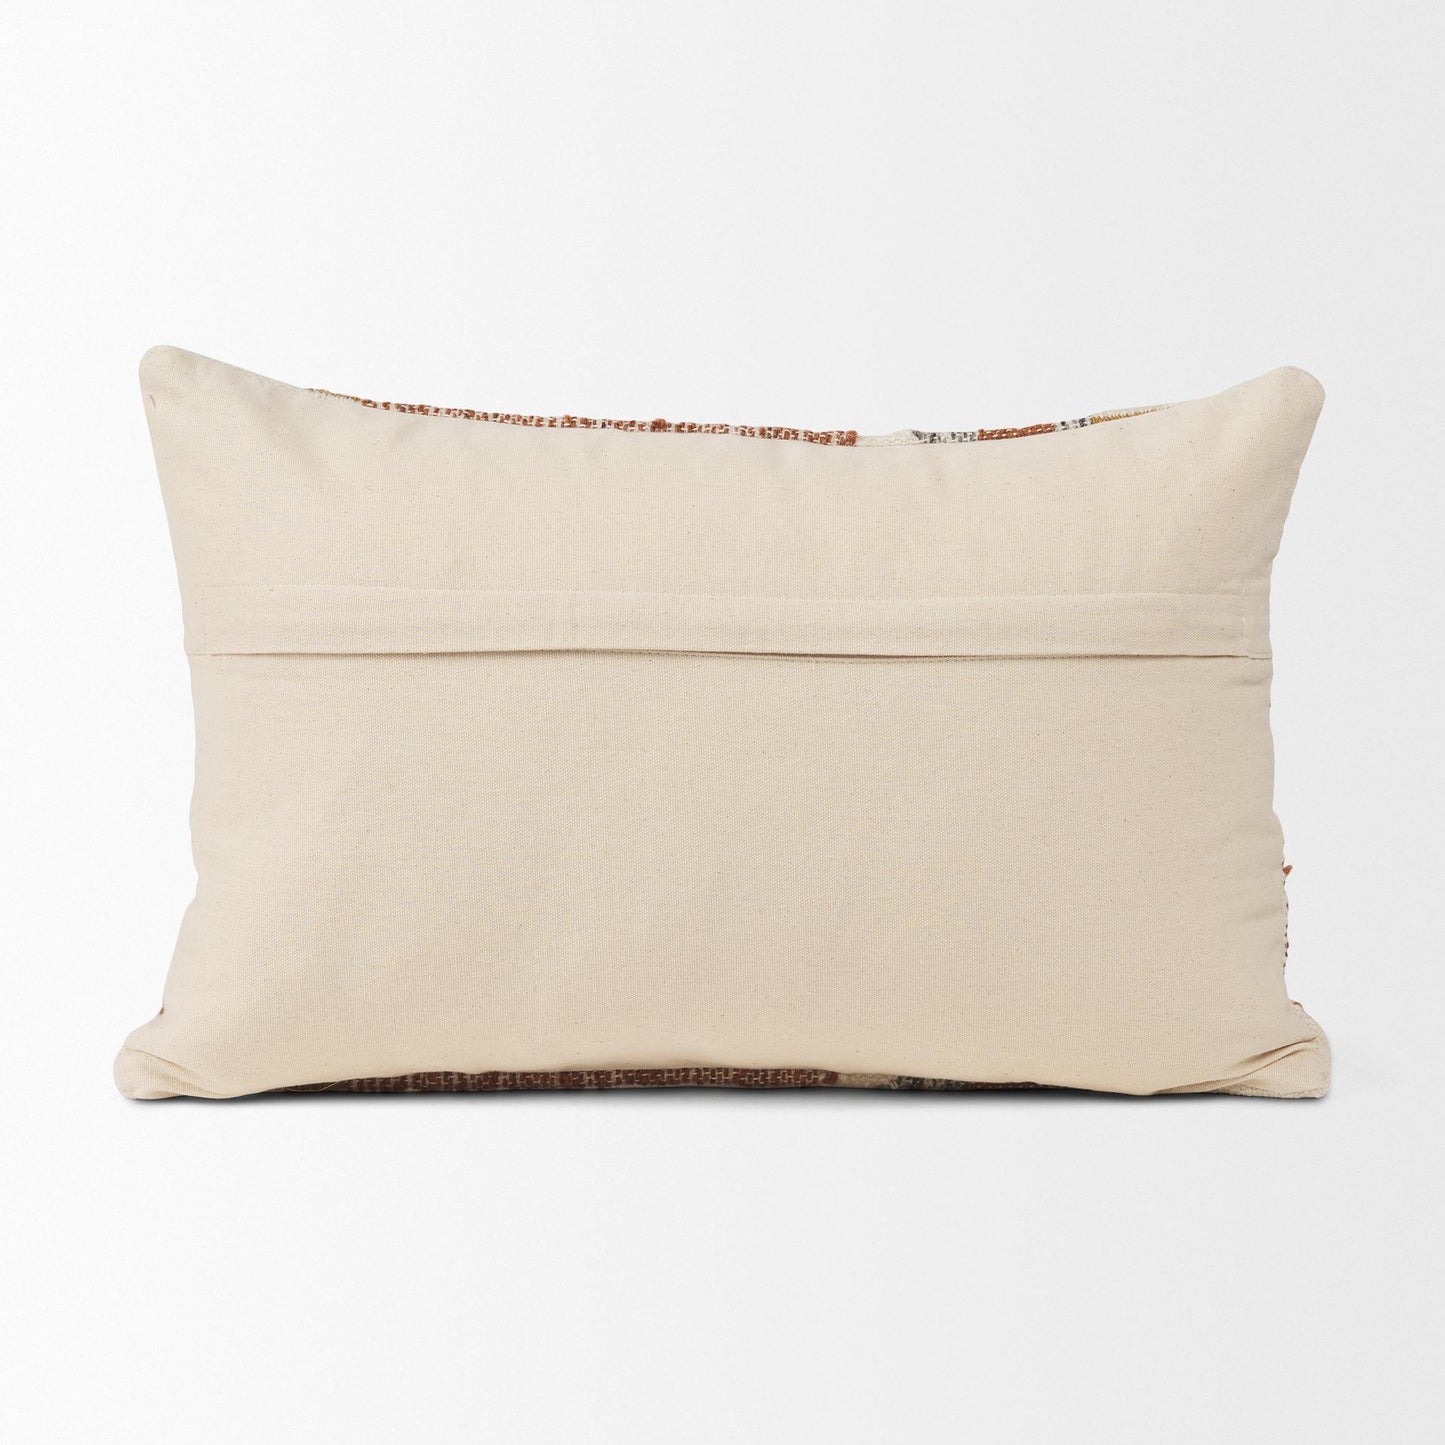 Kenzie Lumbar Pillow Cover